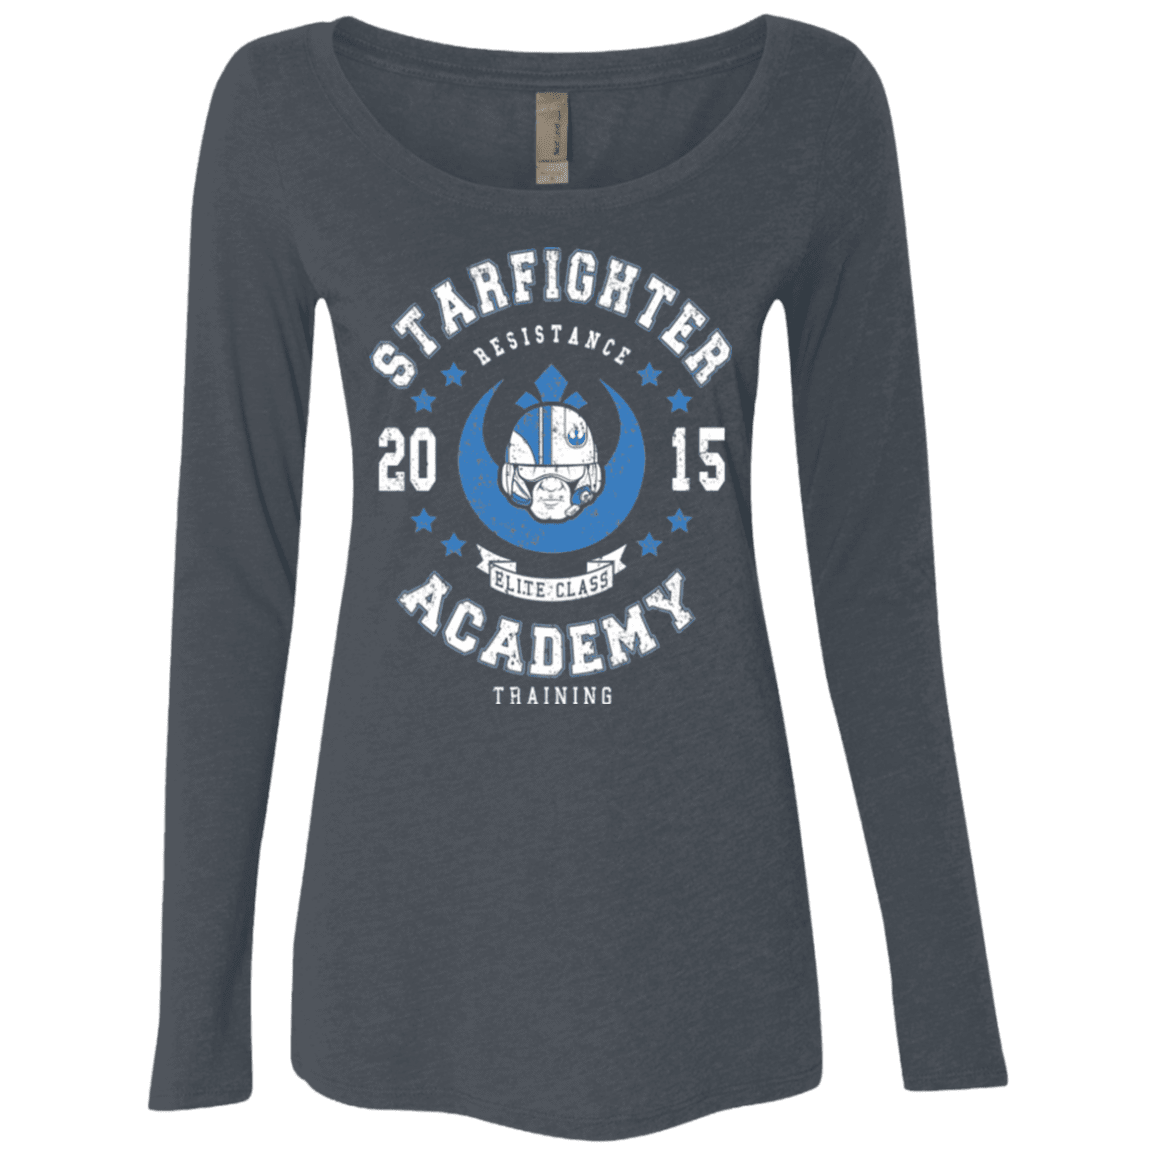 T-Shirts Vintage Navy / Small Starfighter Academy 15 Women's Triblend Long Sleeve Shirt